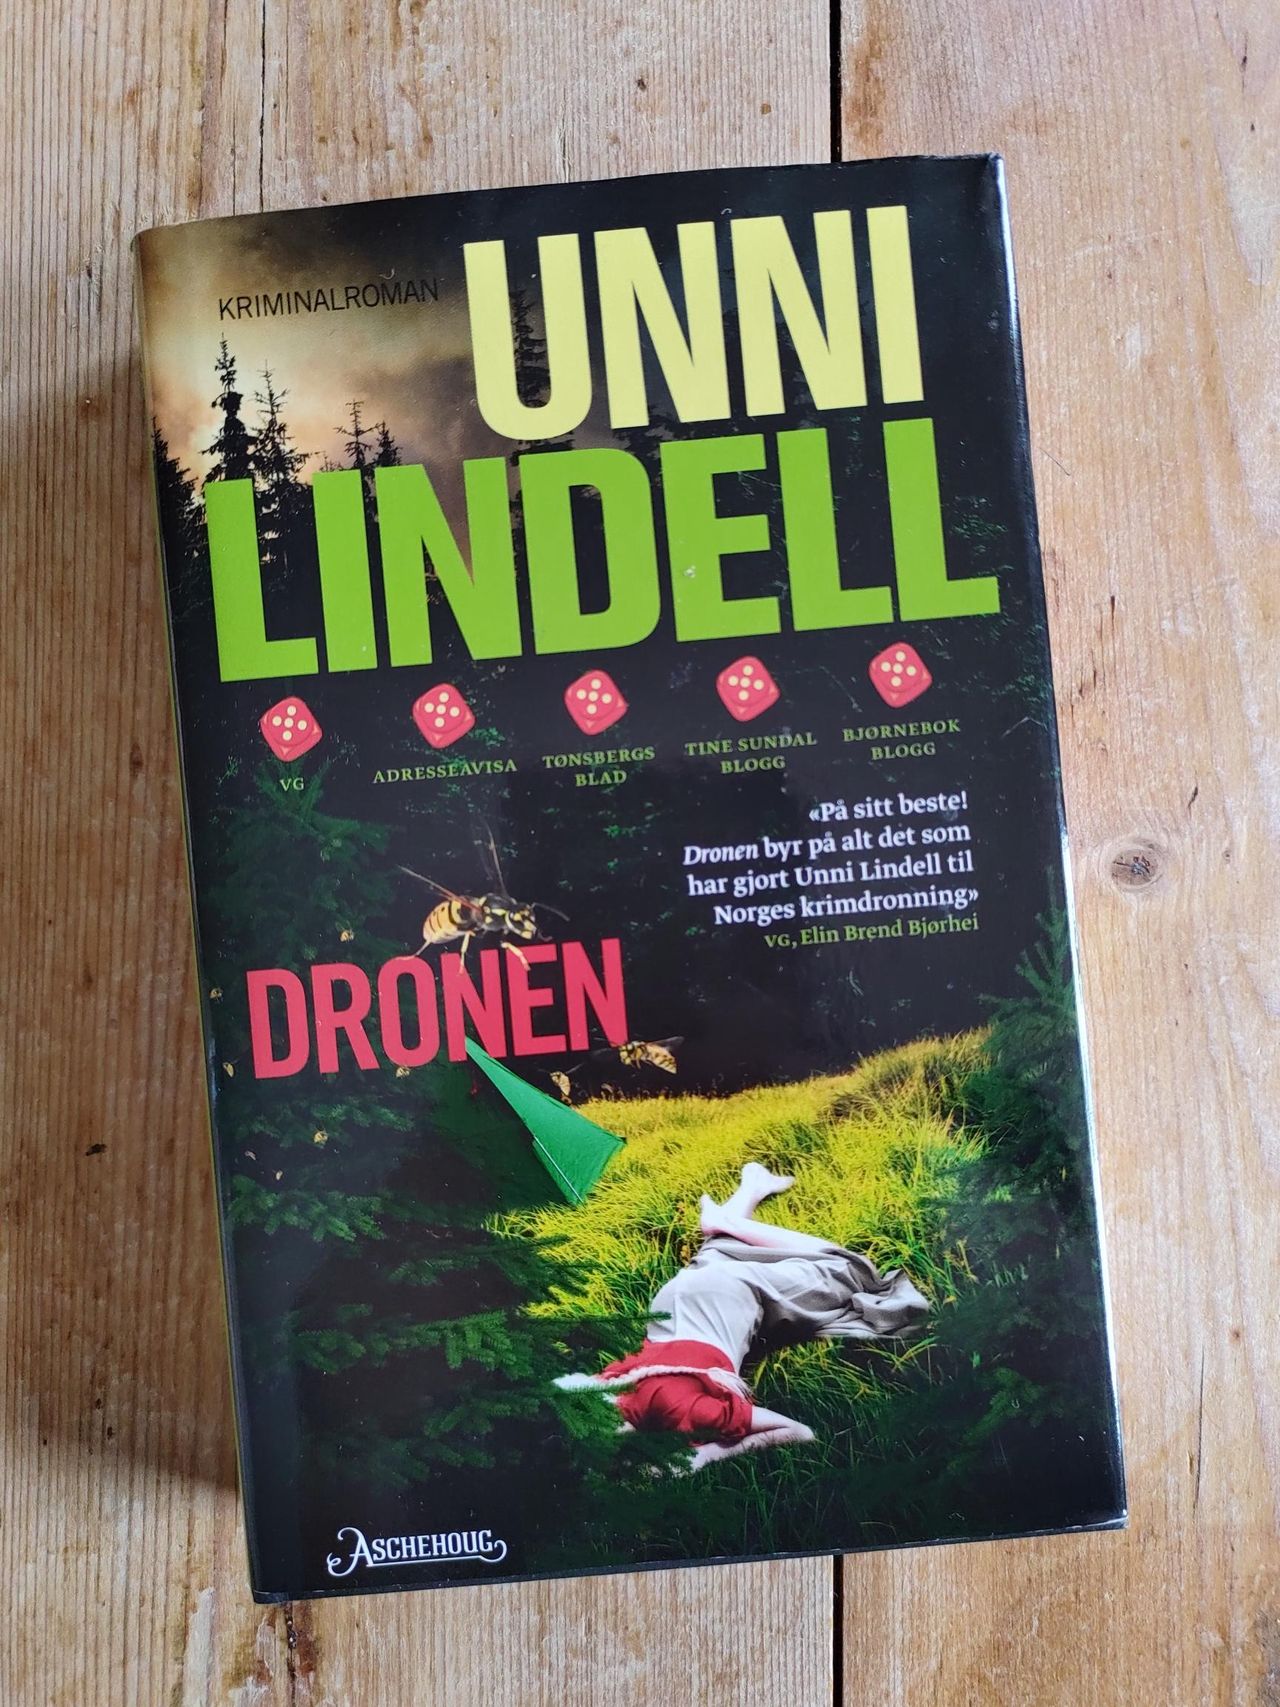 Unni Lindell "Dronen" Kriminalroman | FINN torget